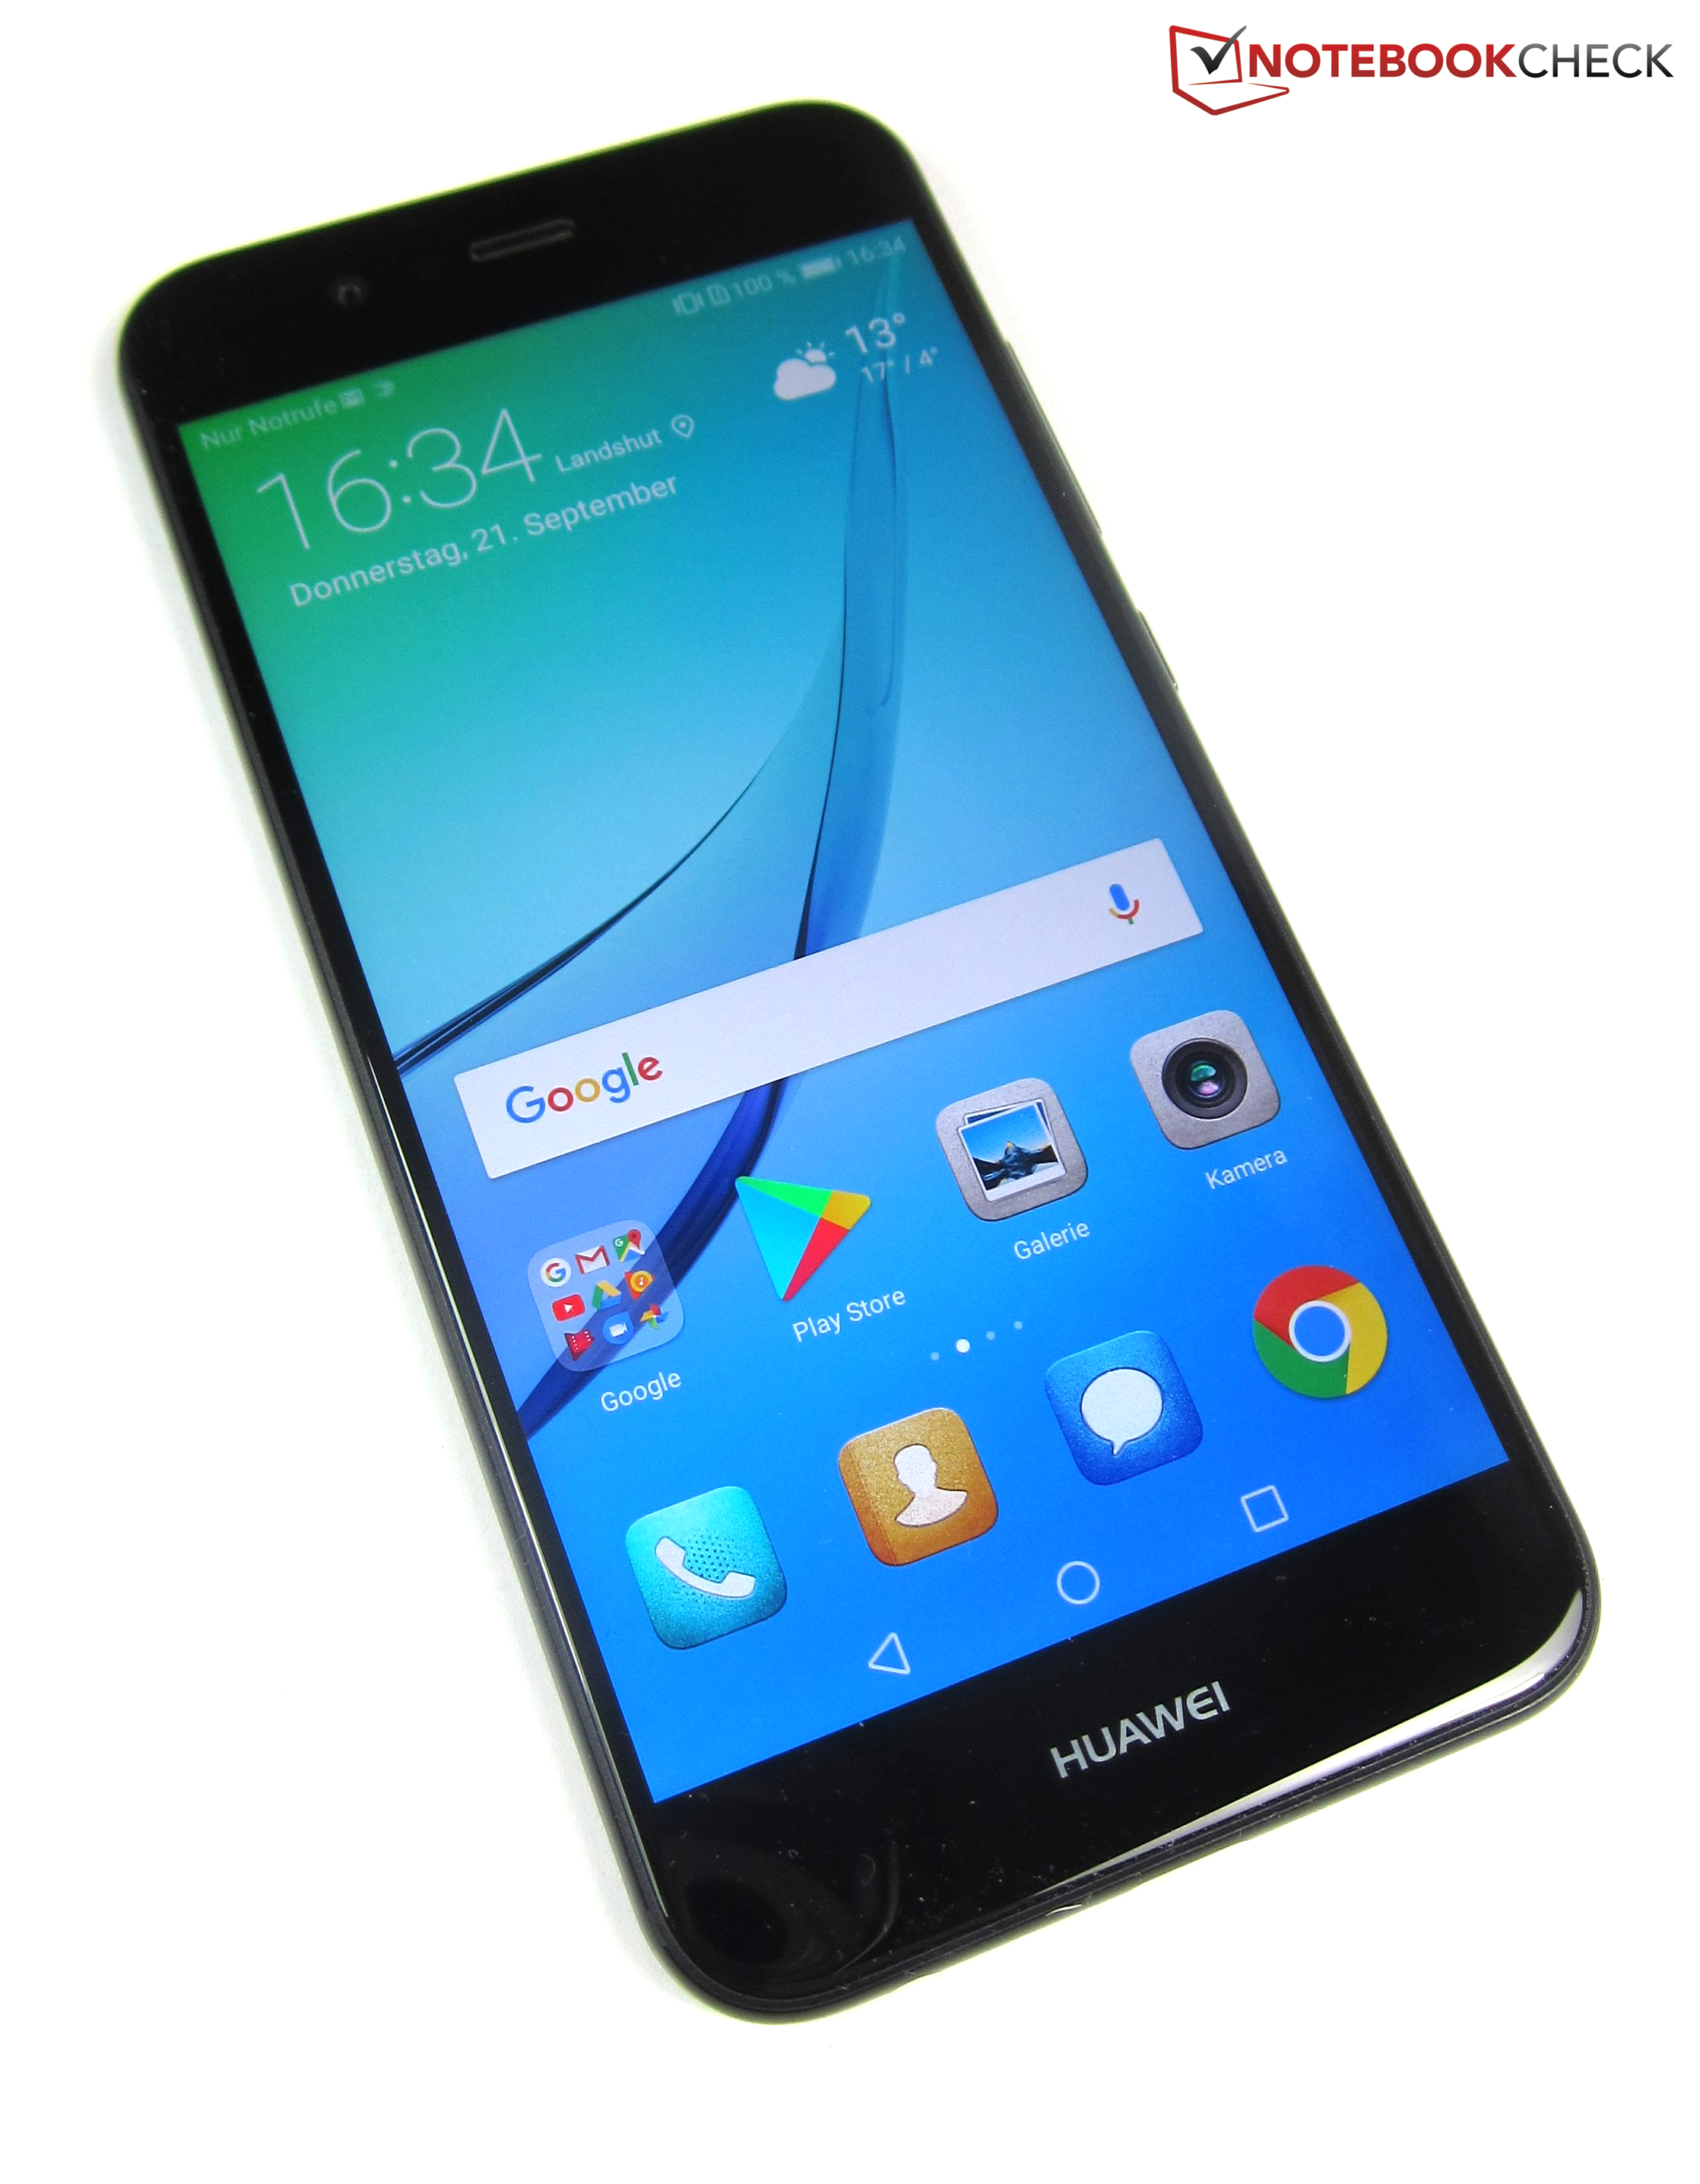 Huawei Nova 2 Smartphone Review - NotebookCheck.net Reviews